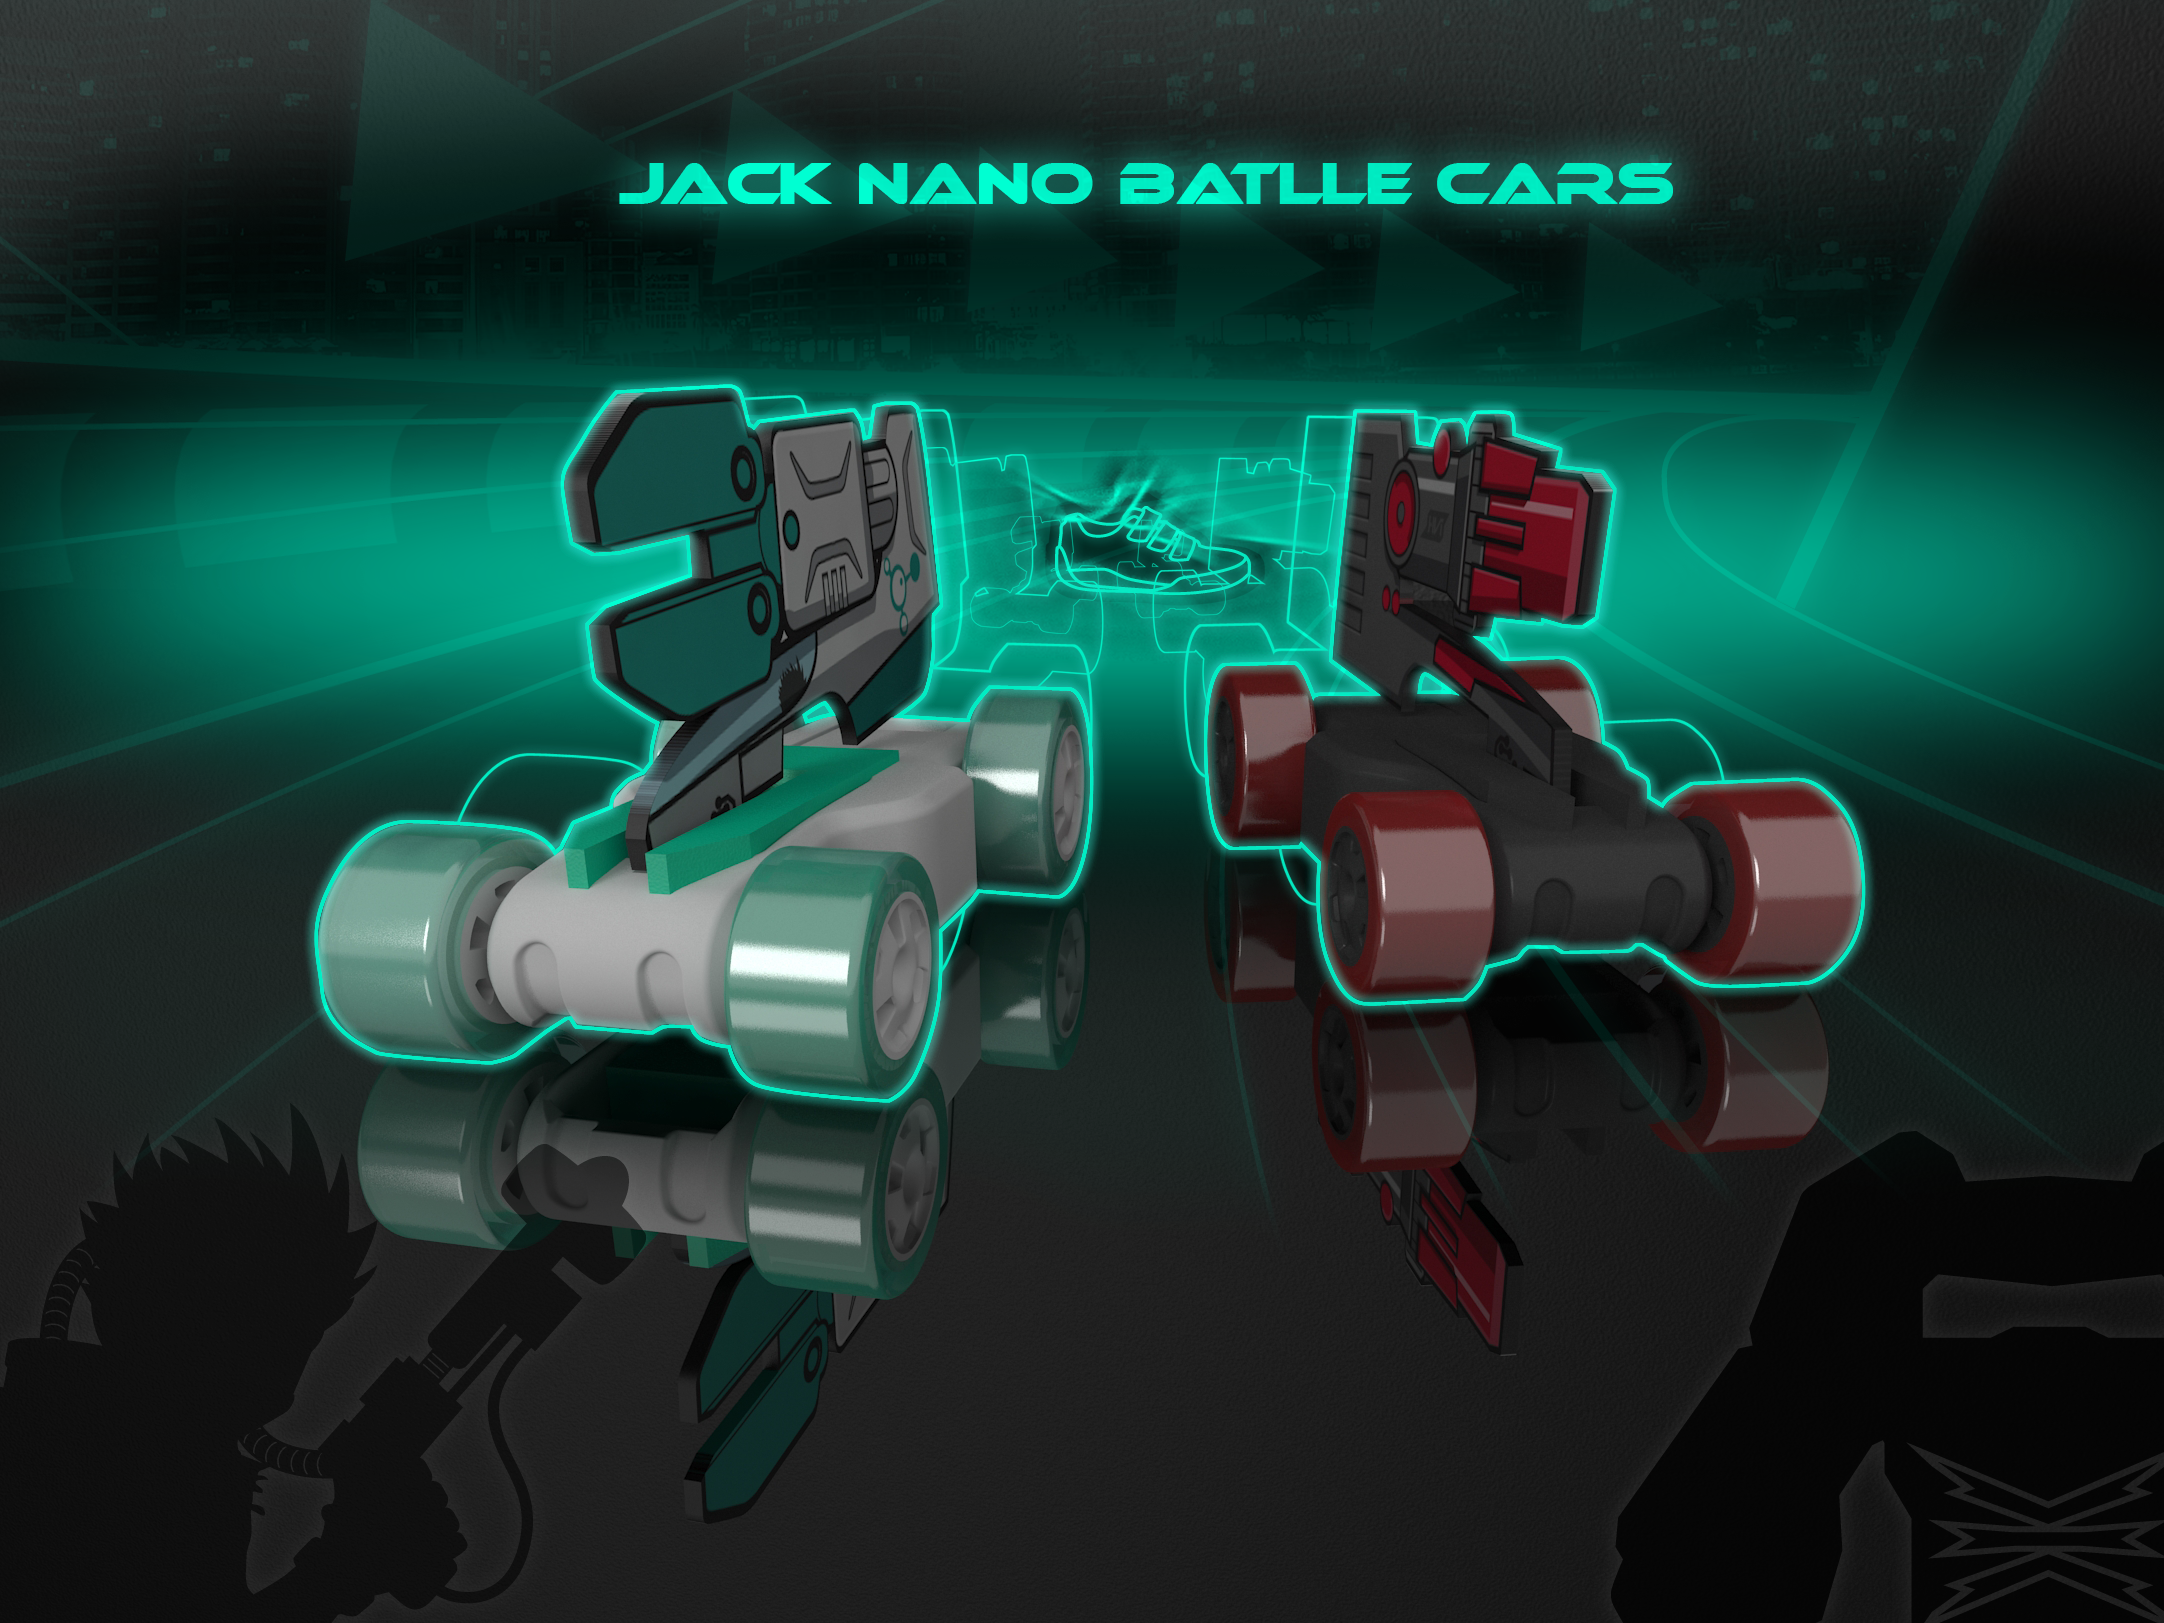 Clarks Jack Nano Battle Cars logo